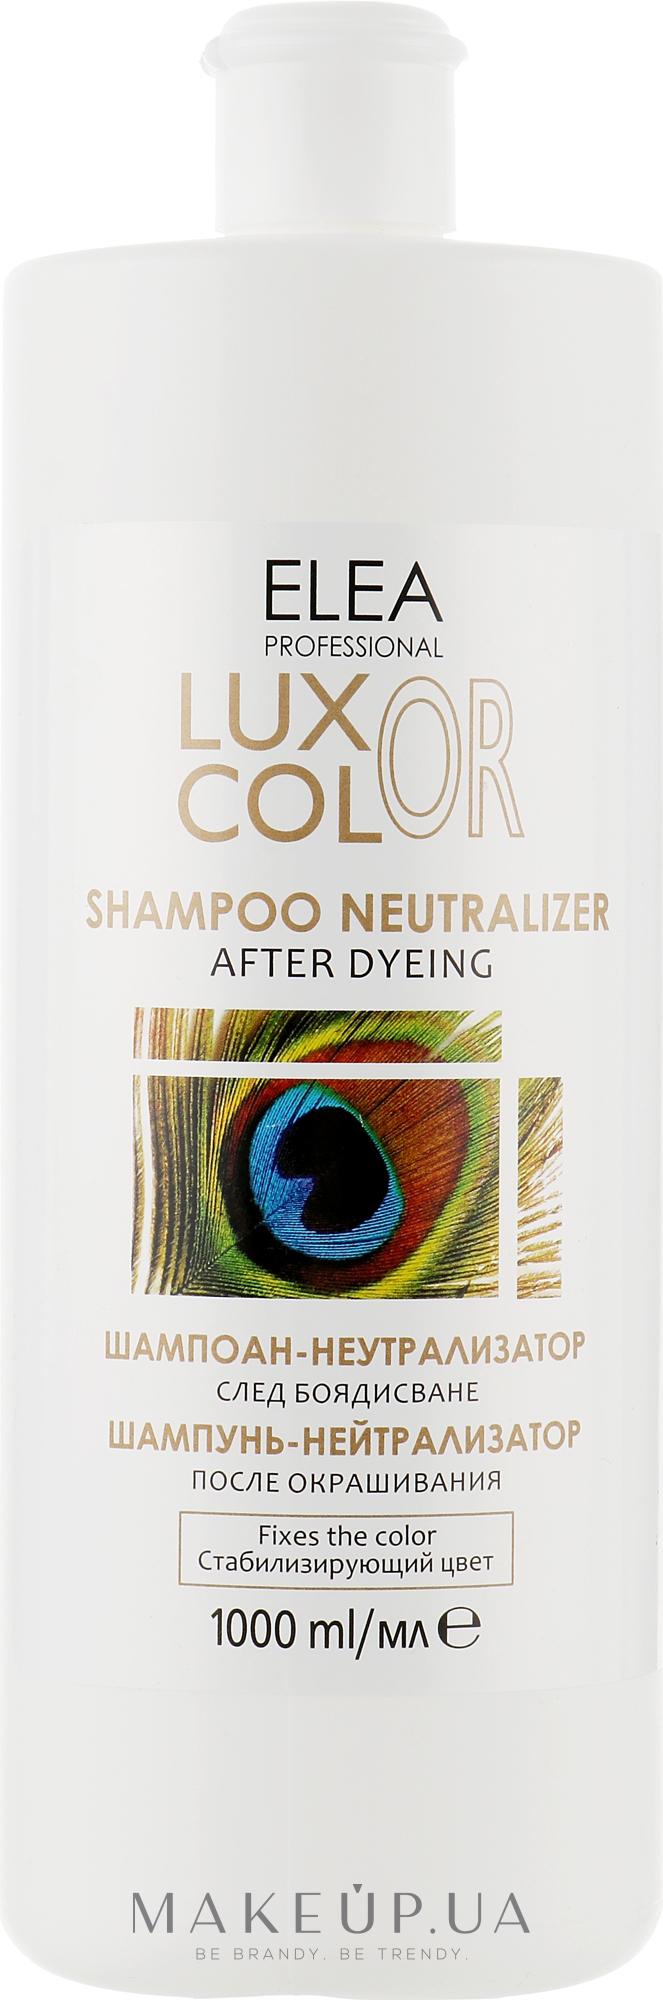 Шампунь-нейтрализатор после окрашивания рН 4.5 - Elea Professional Luxor Color Shampoo Neutralizer — фото 1000ml